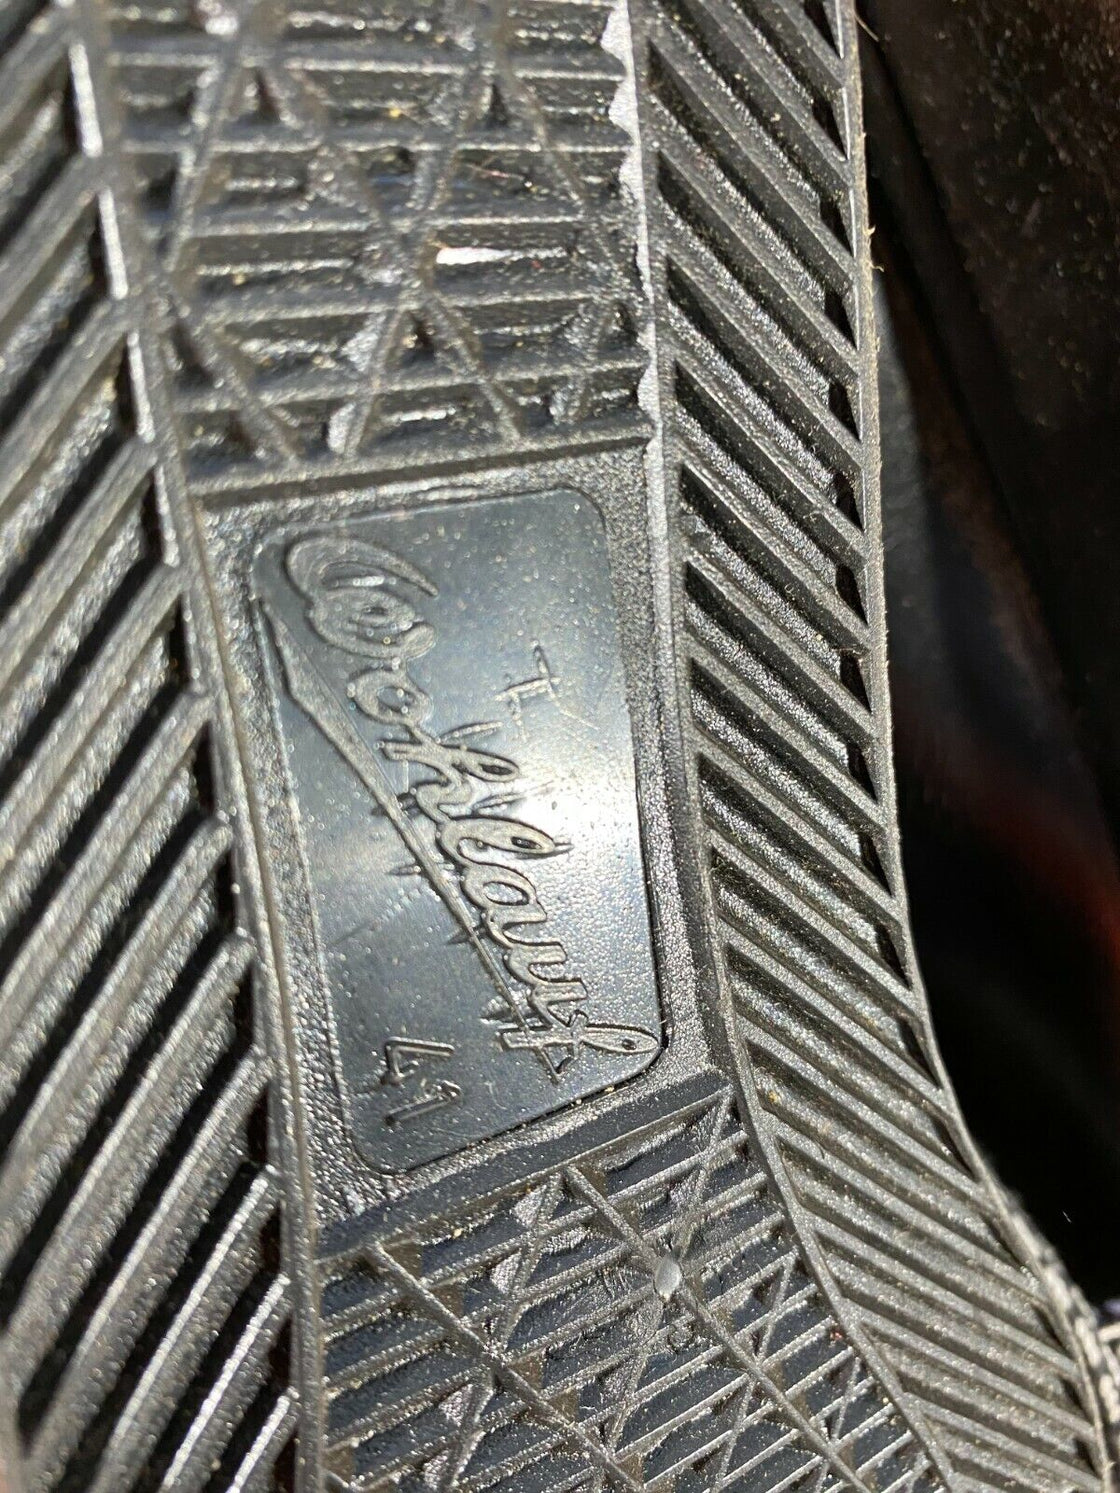 WOHLAUF Leather Vintage Alpine Ski Boots EU41, US7.5, Mondo 265 Cable Bindings